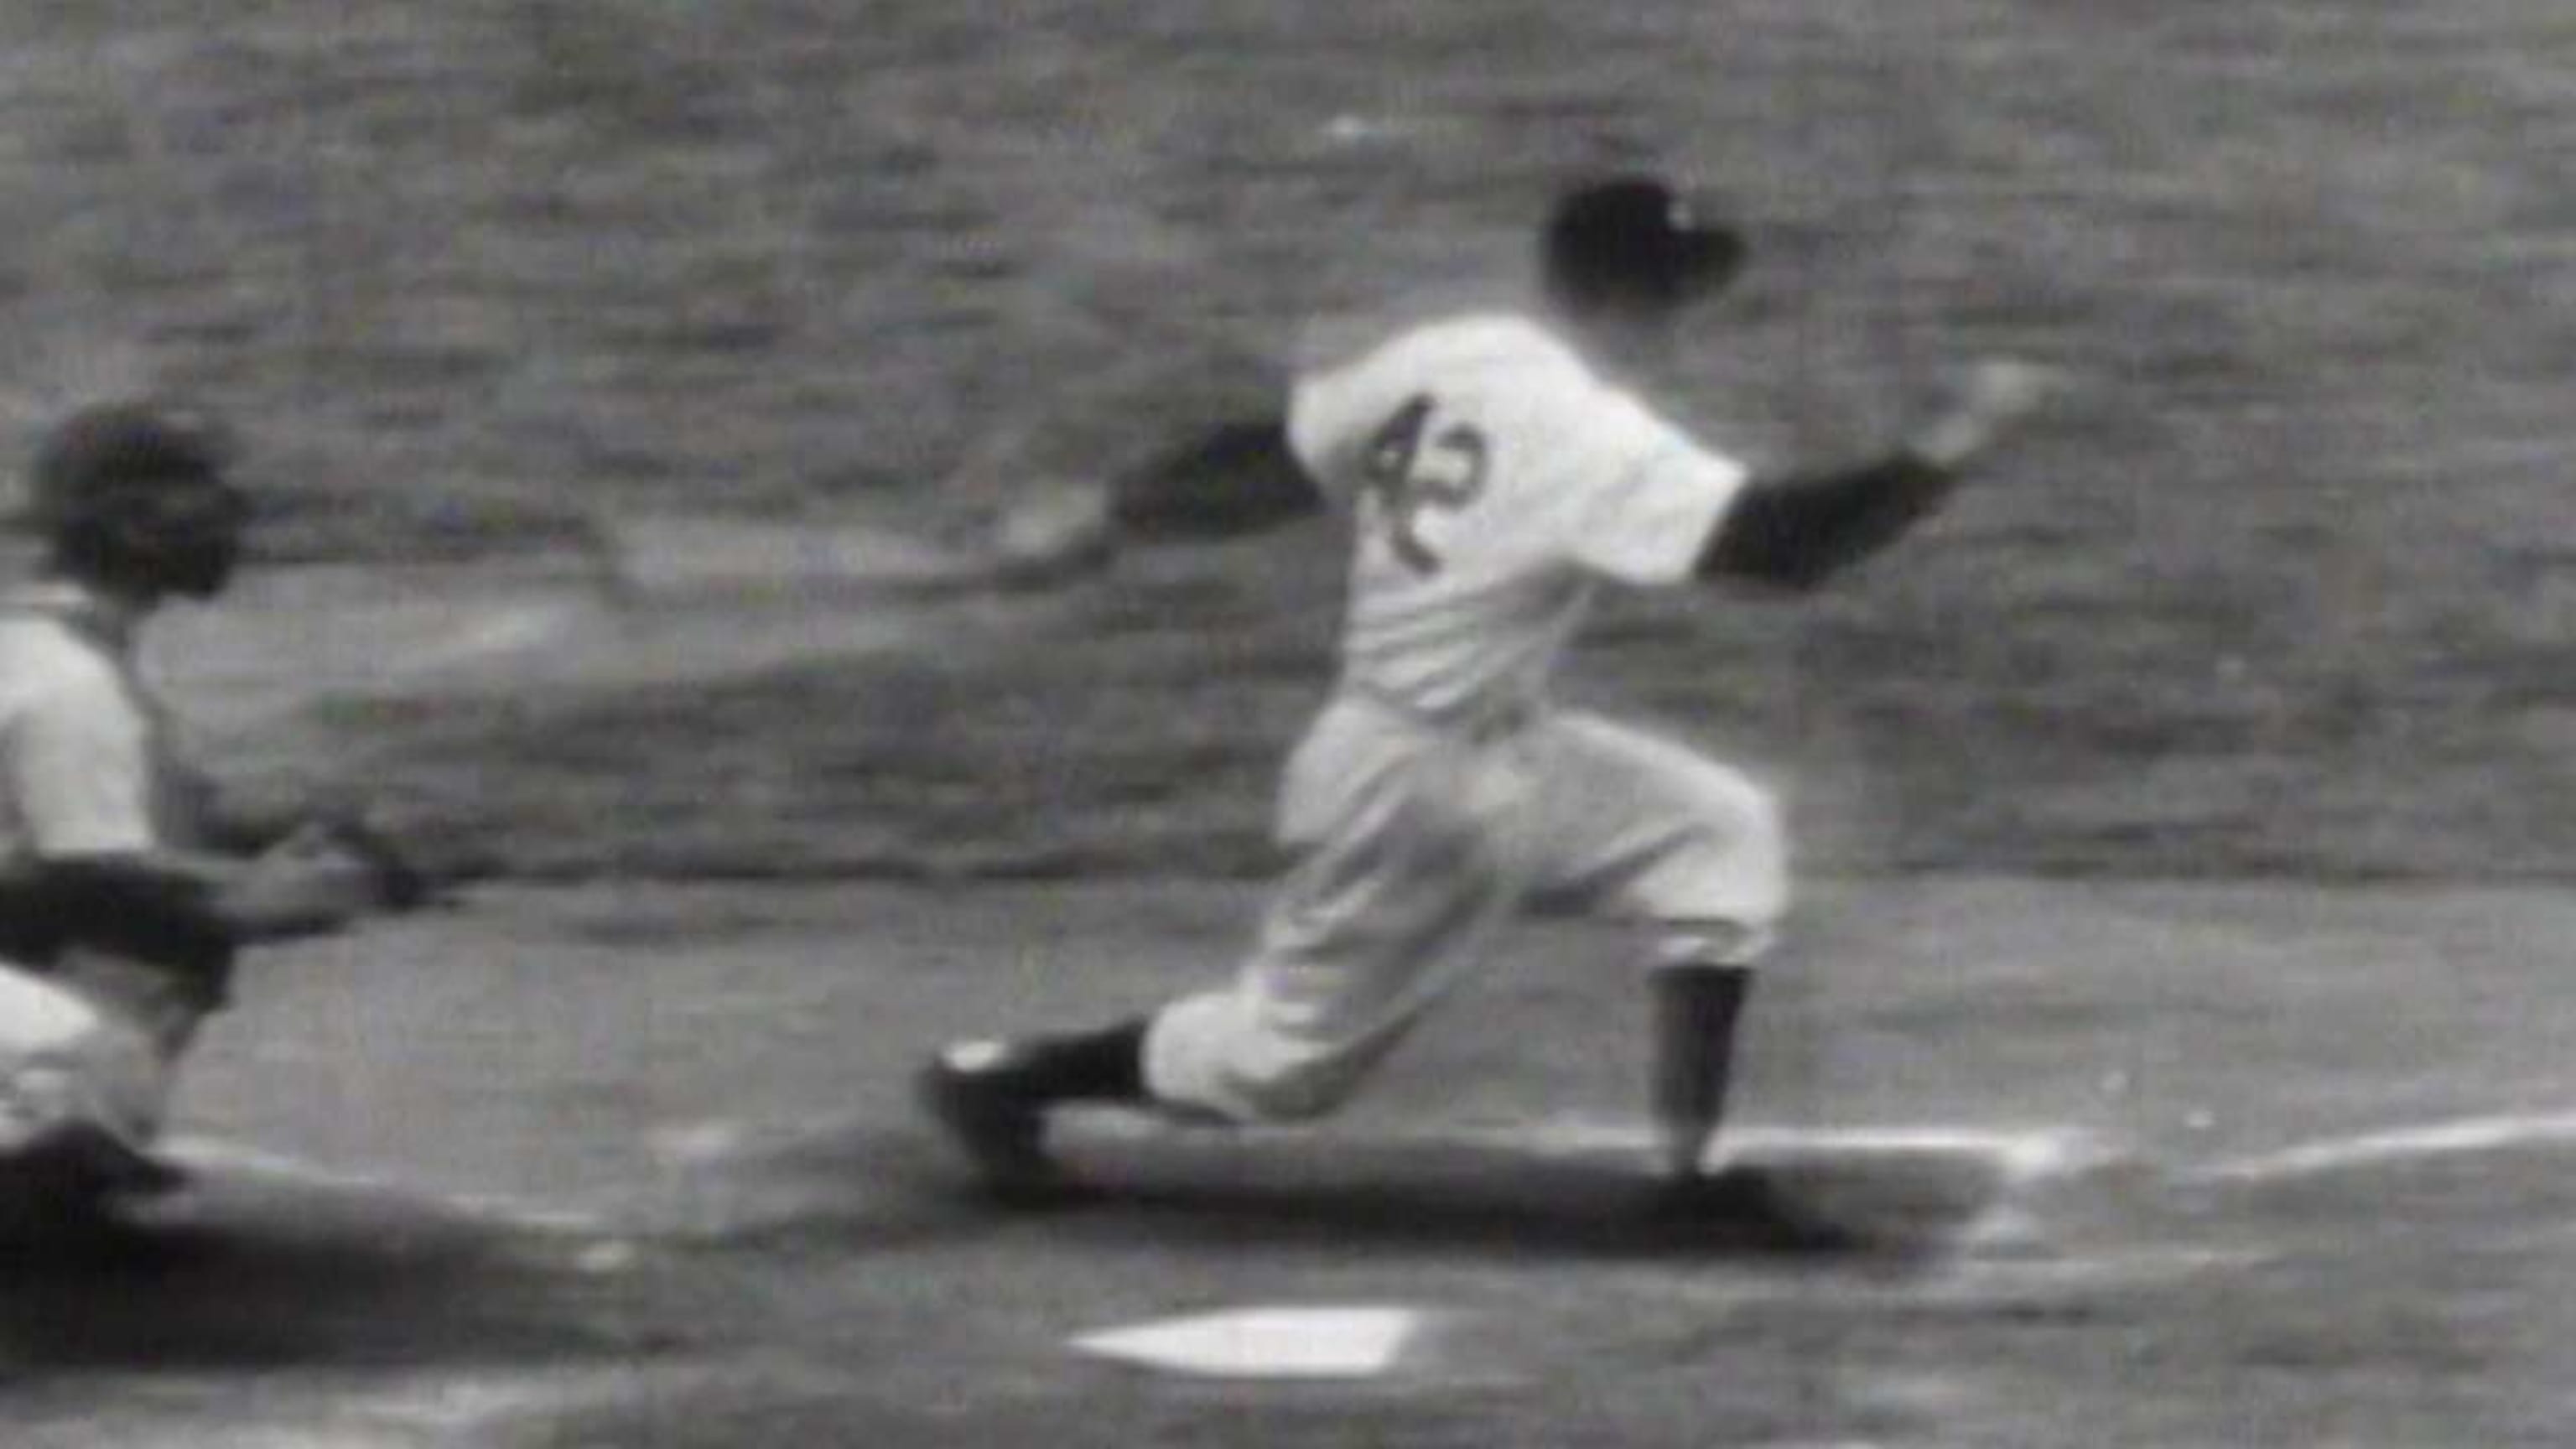 1950 World Series recap